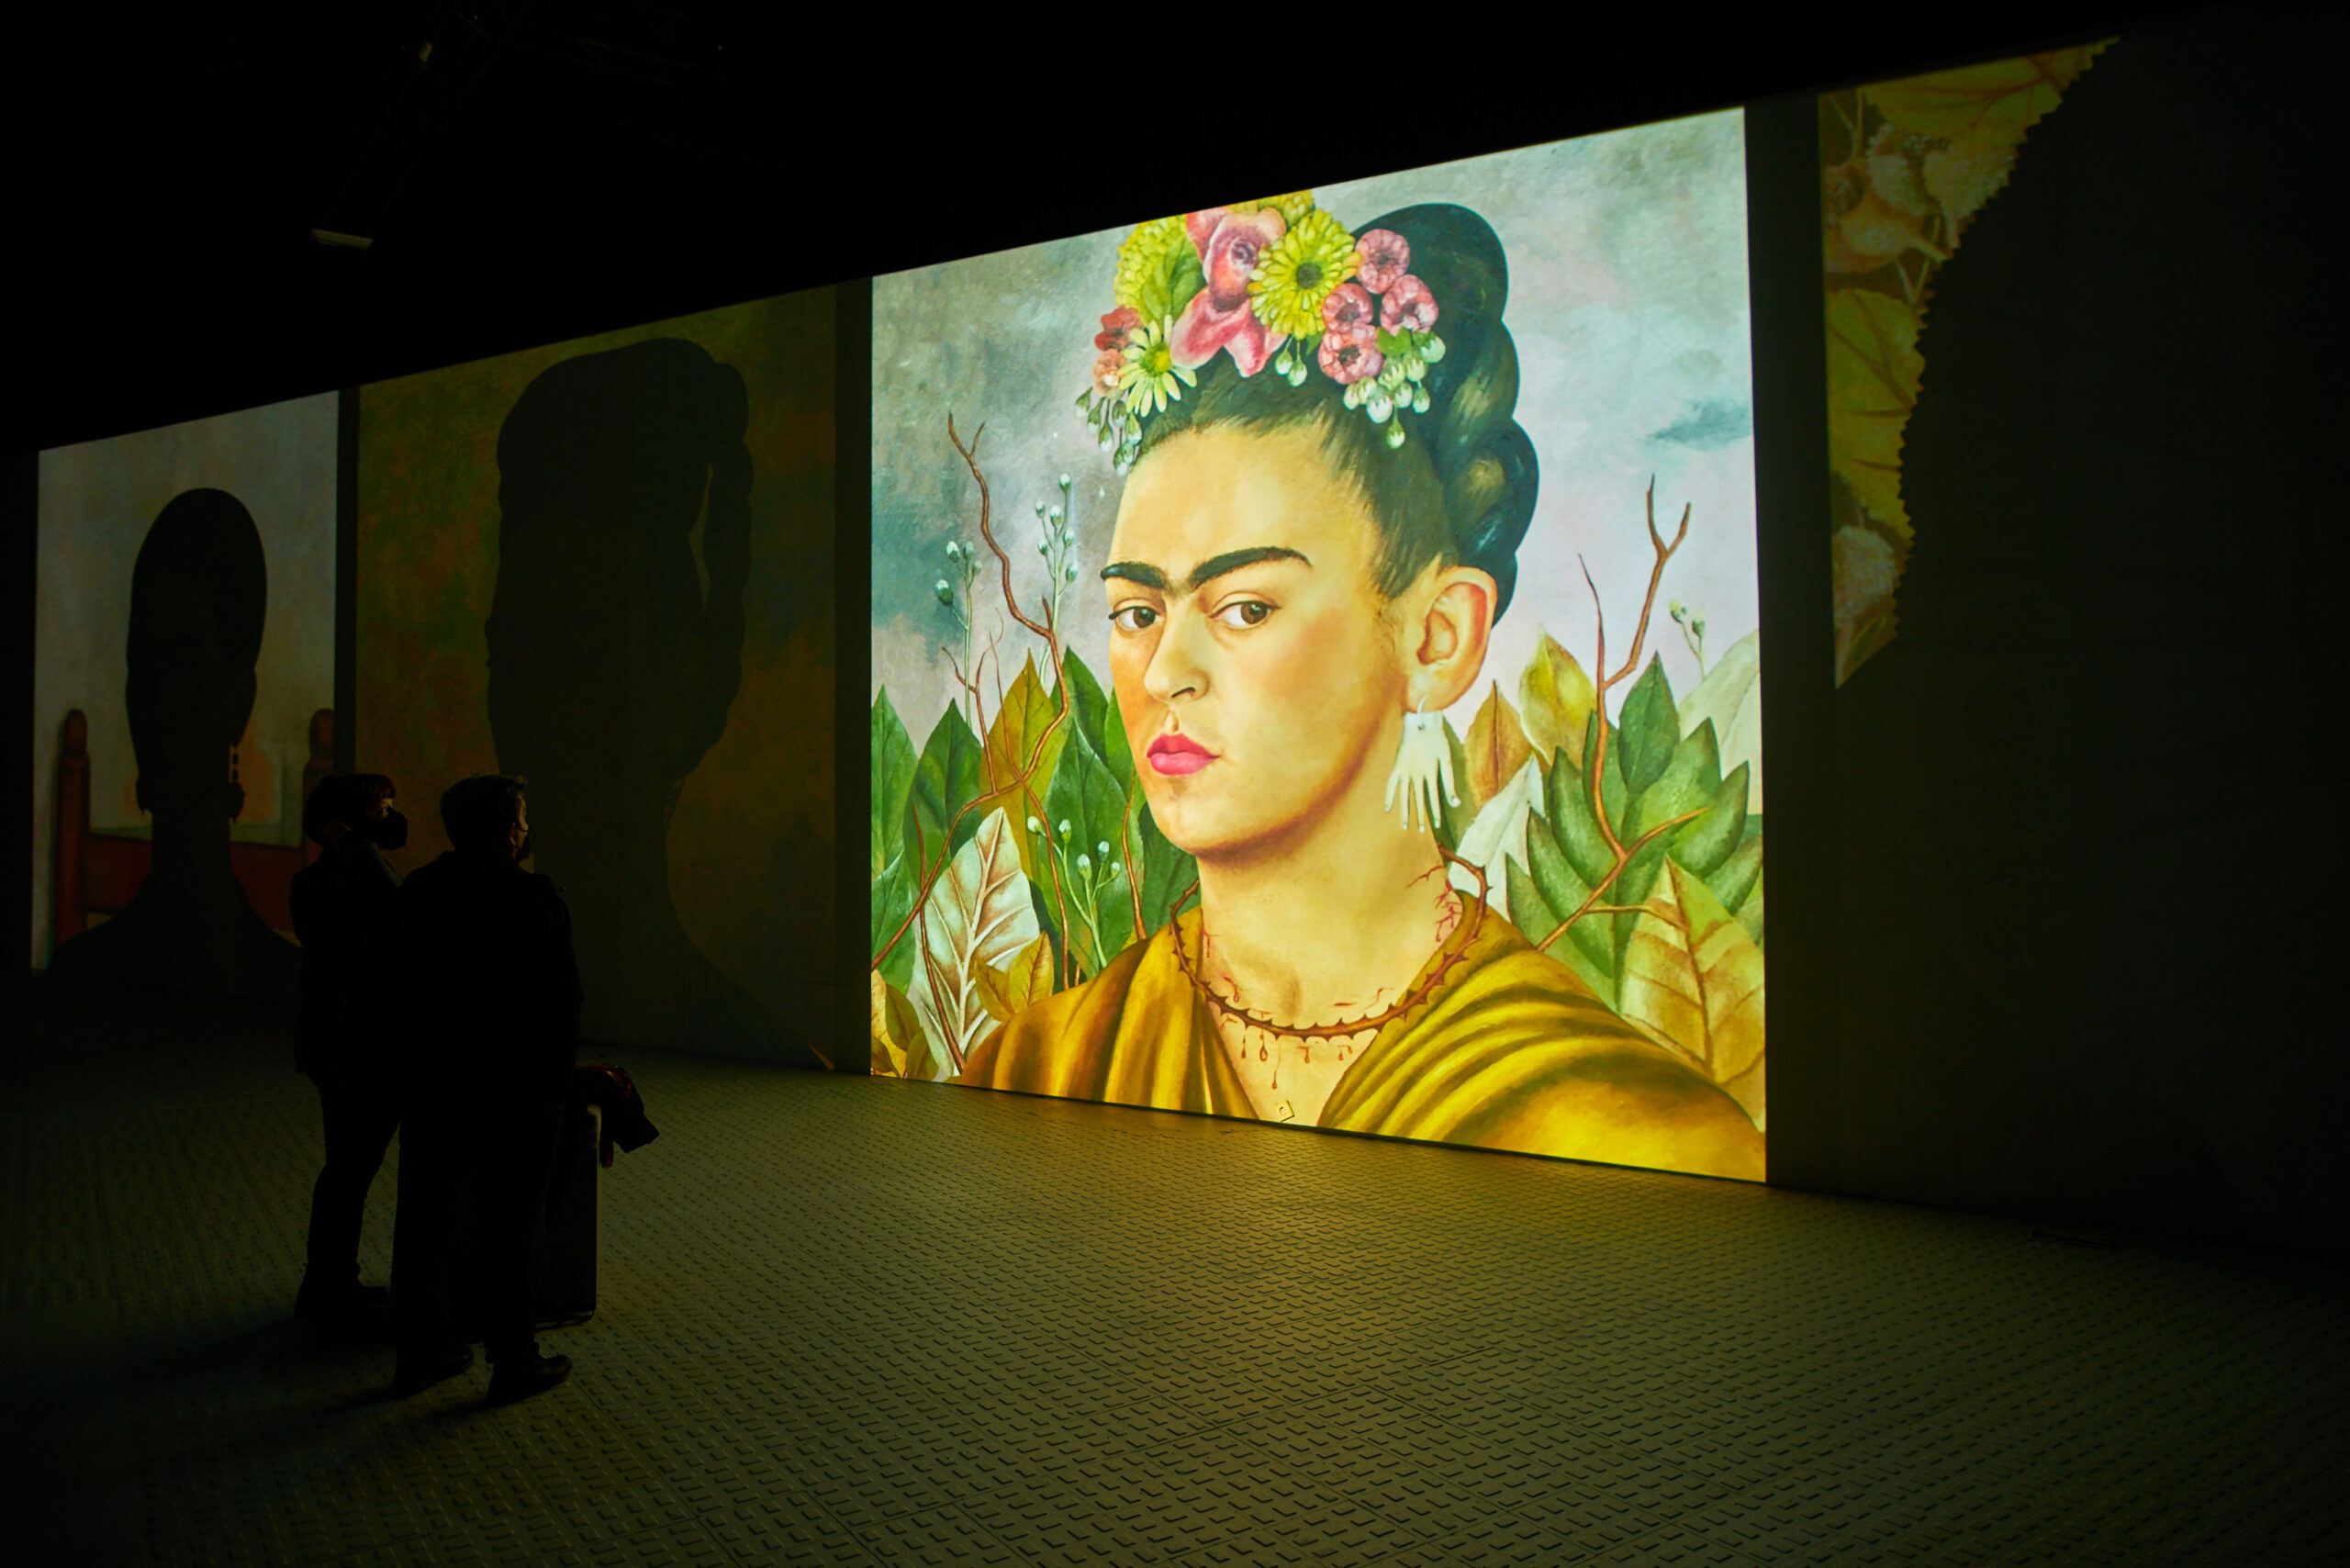 retrait of frida kahlo with nature